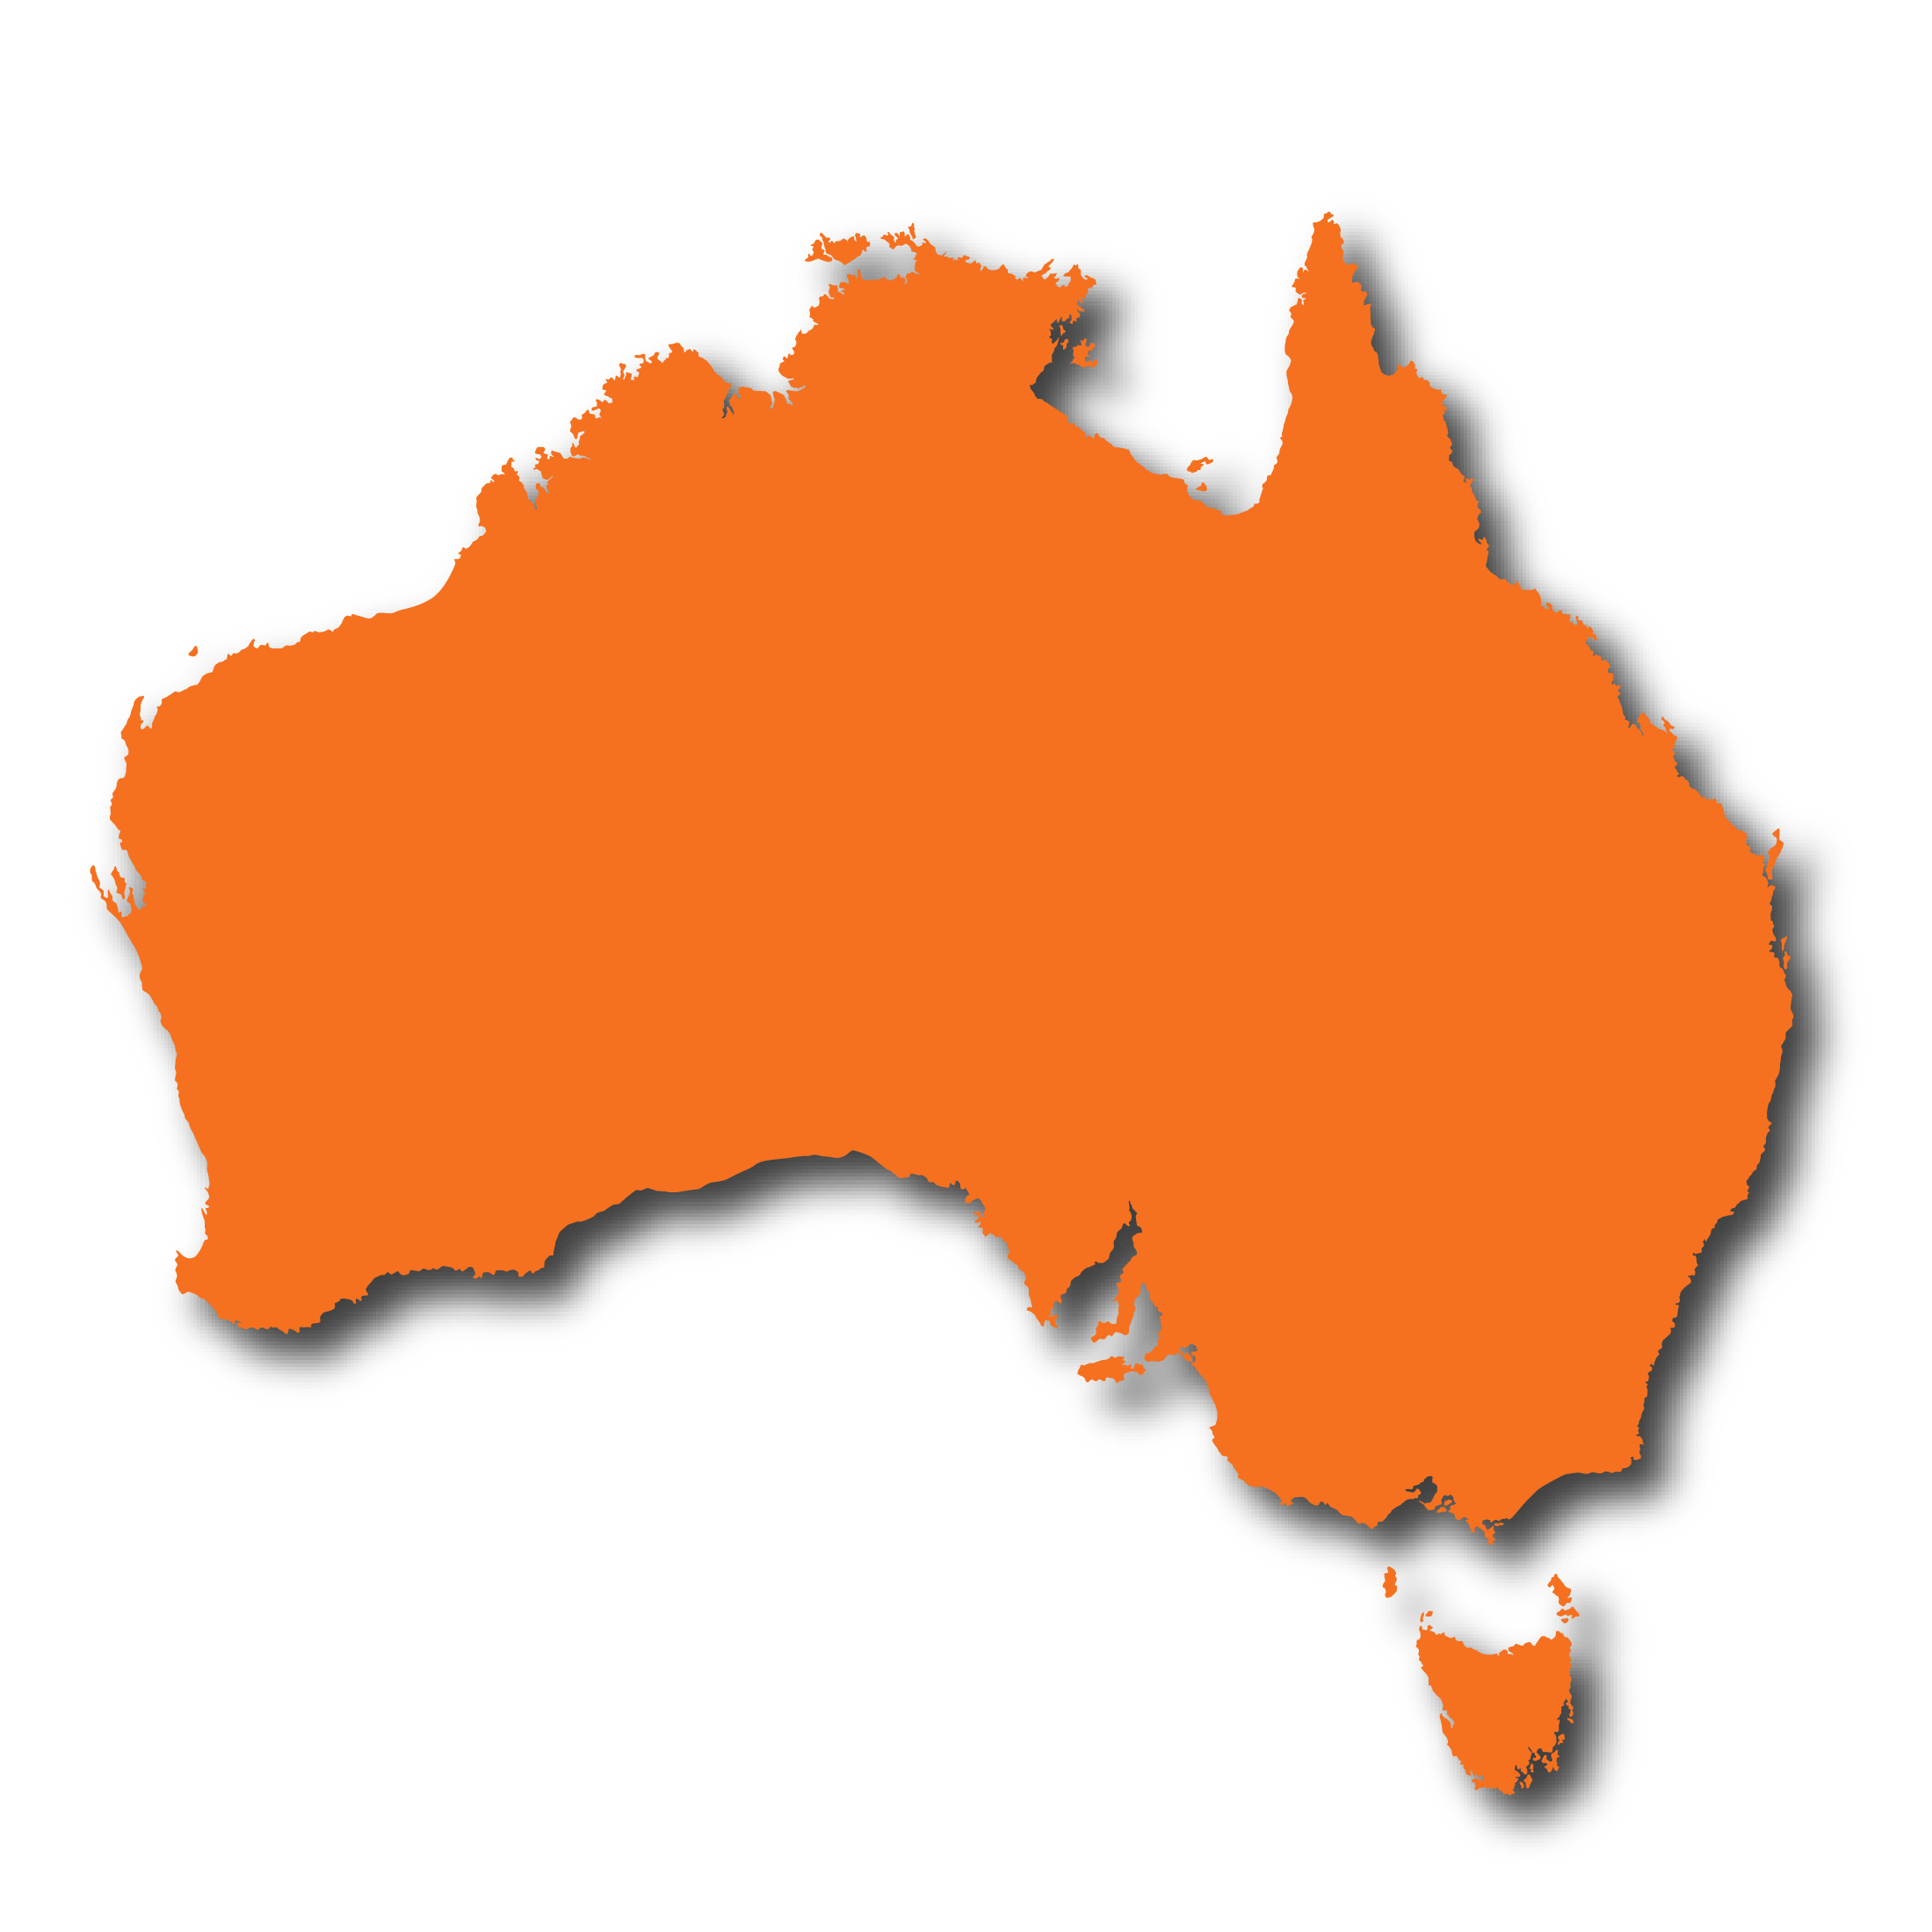 Châu Úc (Australia & New Zealand)